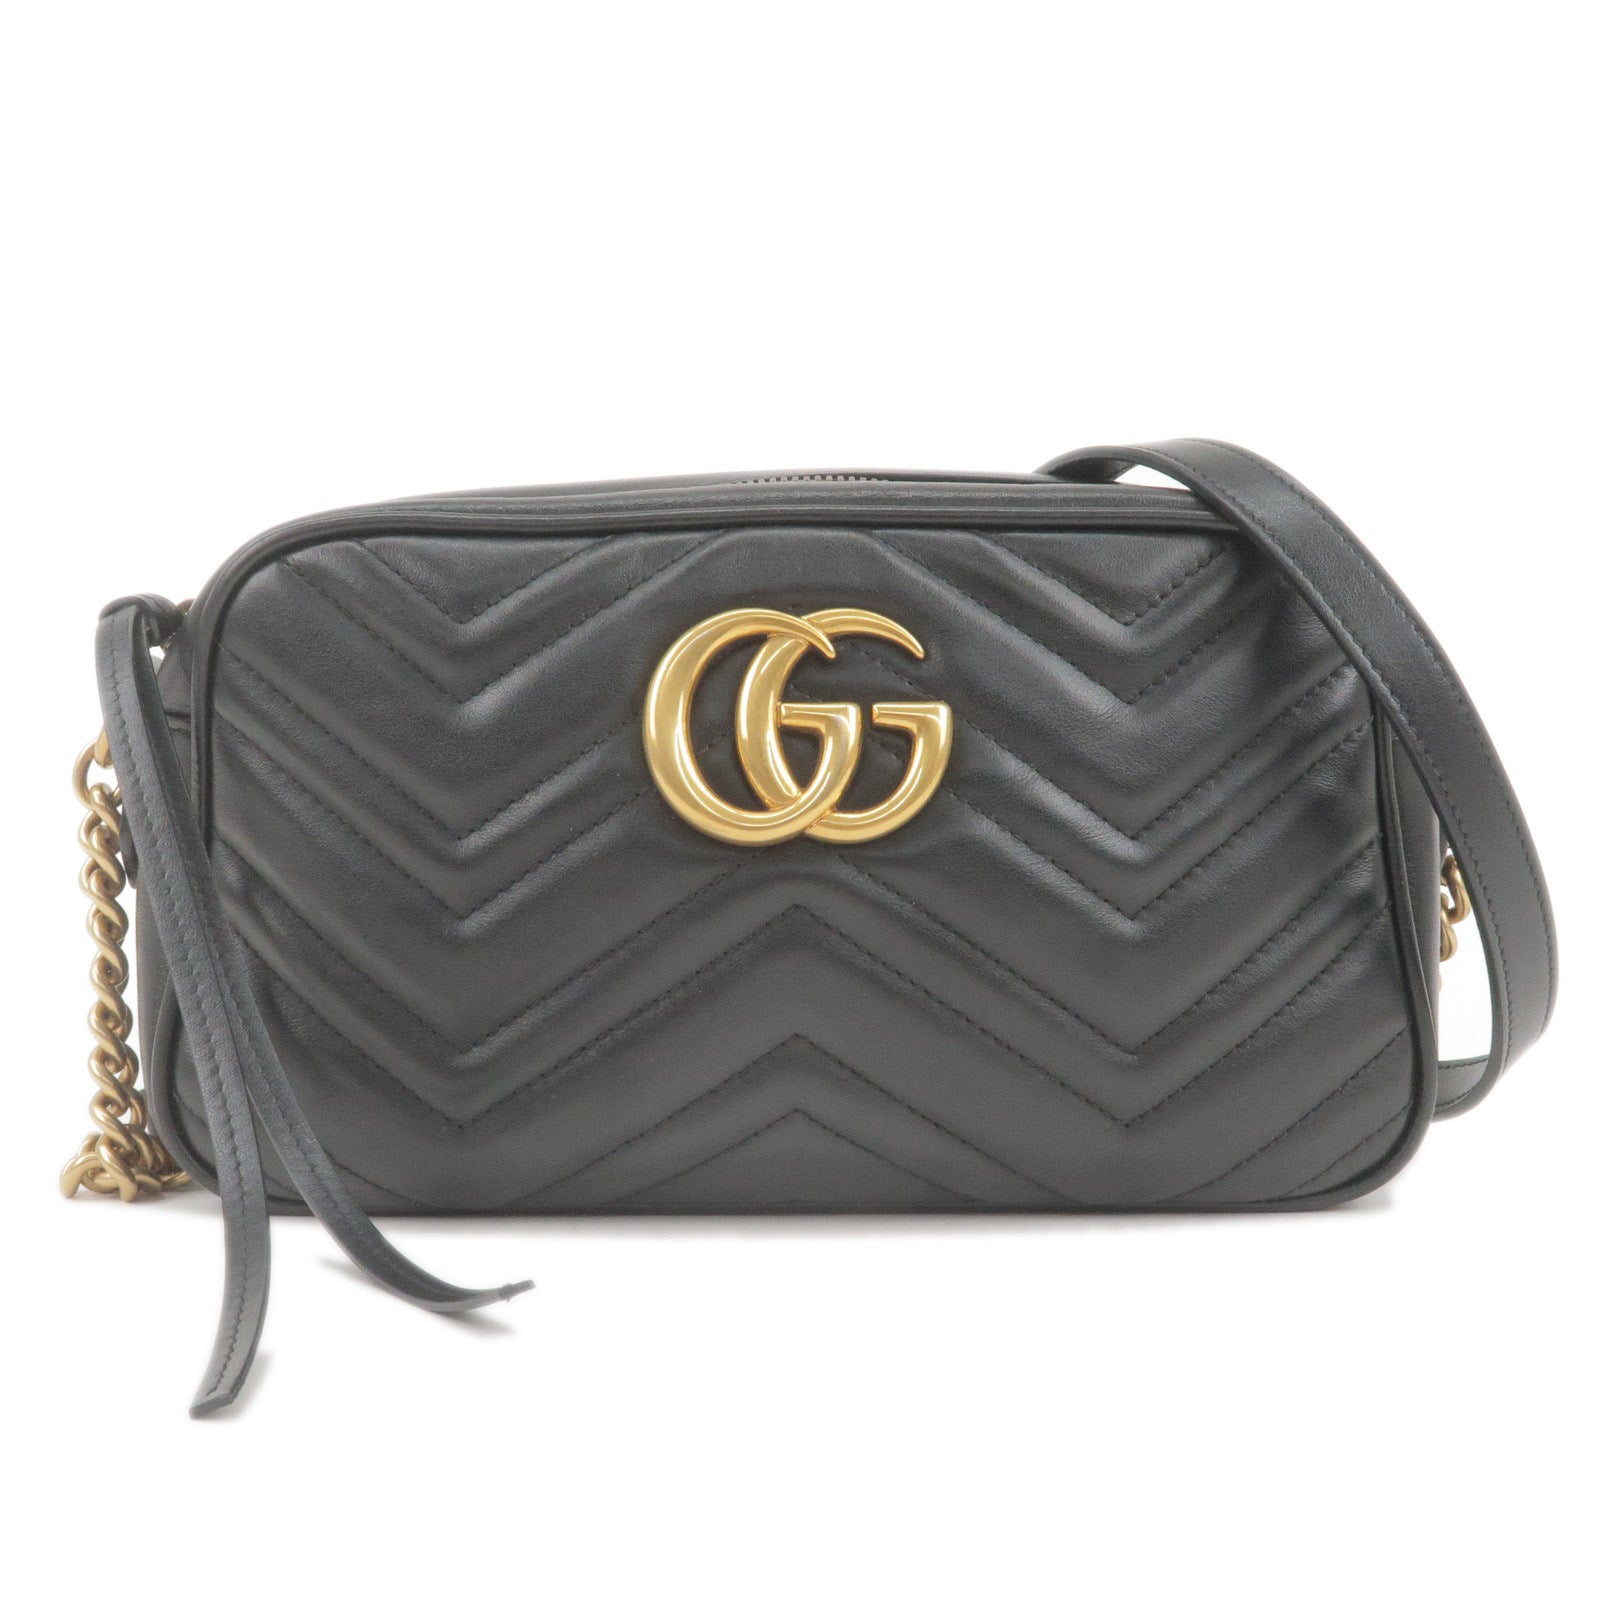 GUCCI-GG-Marmont-Leather-Chain-Shoulder-Bag-Black-447632